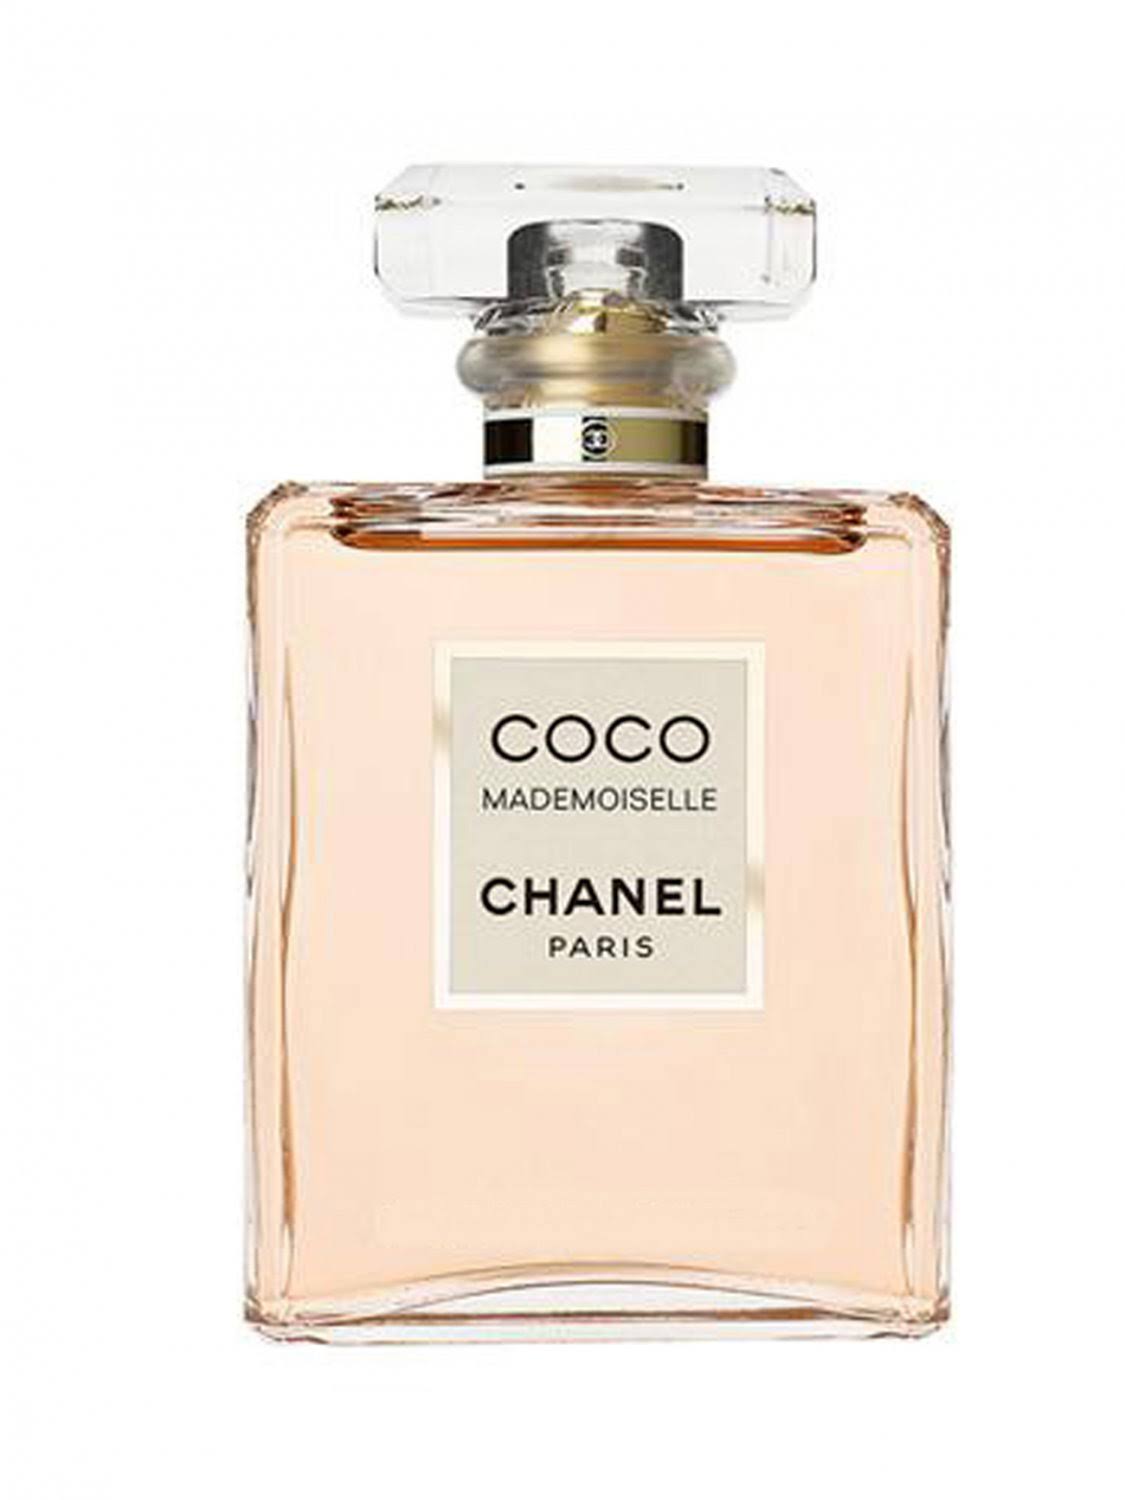 Chanel Coco Mademoiselle for Woman Eau de Parfum Spray - 100ml